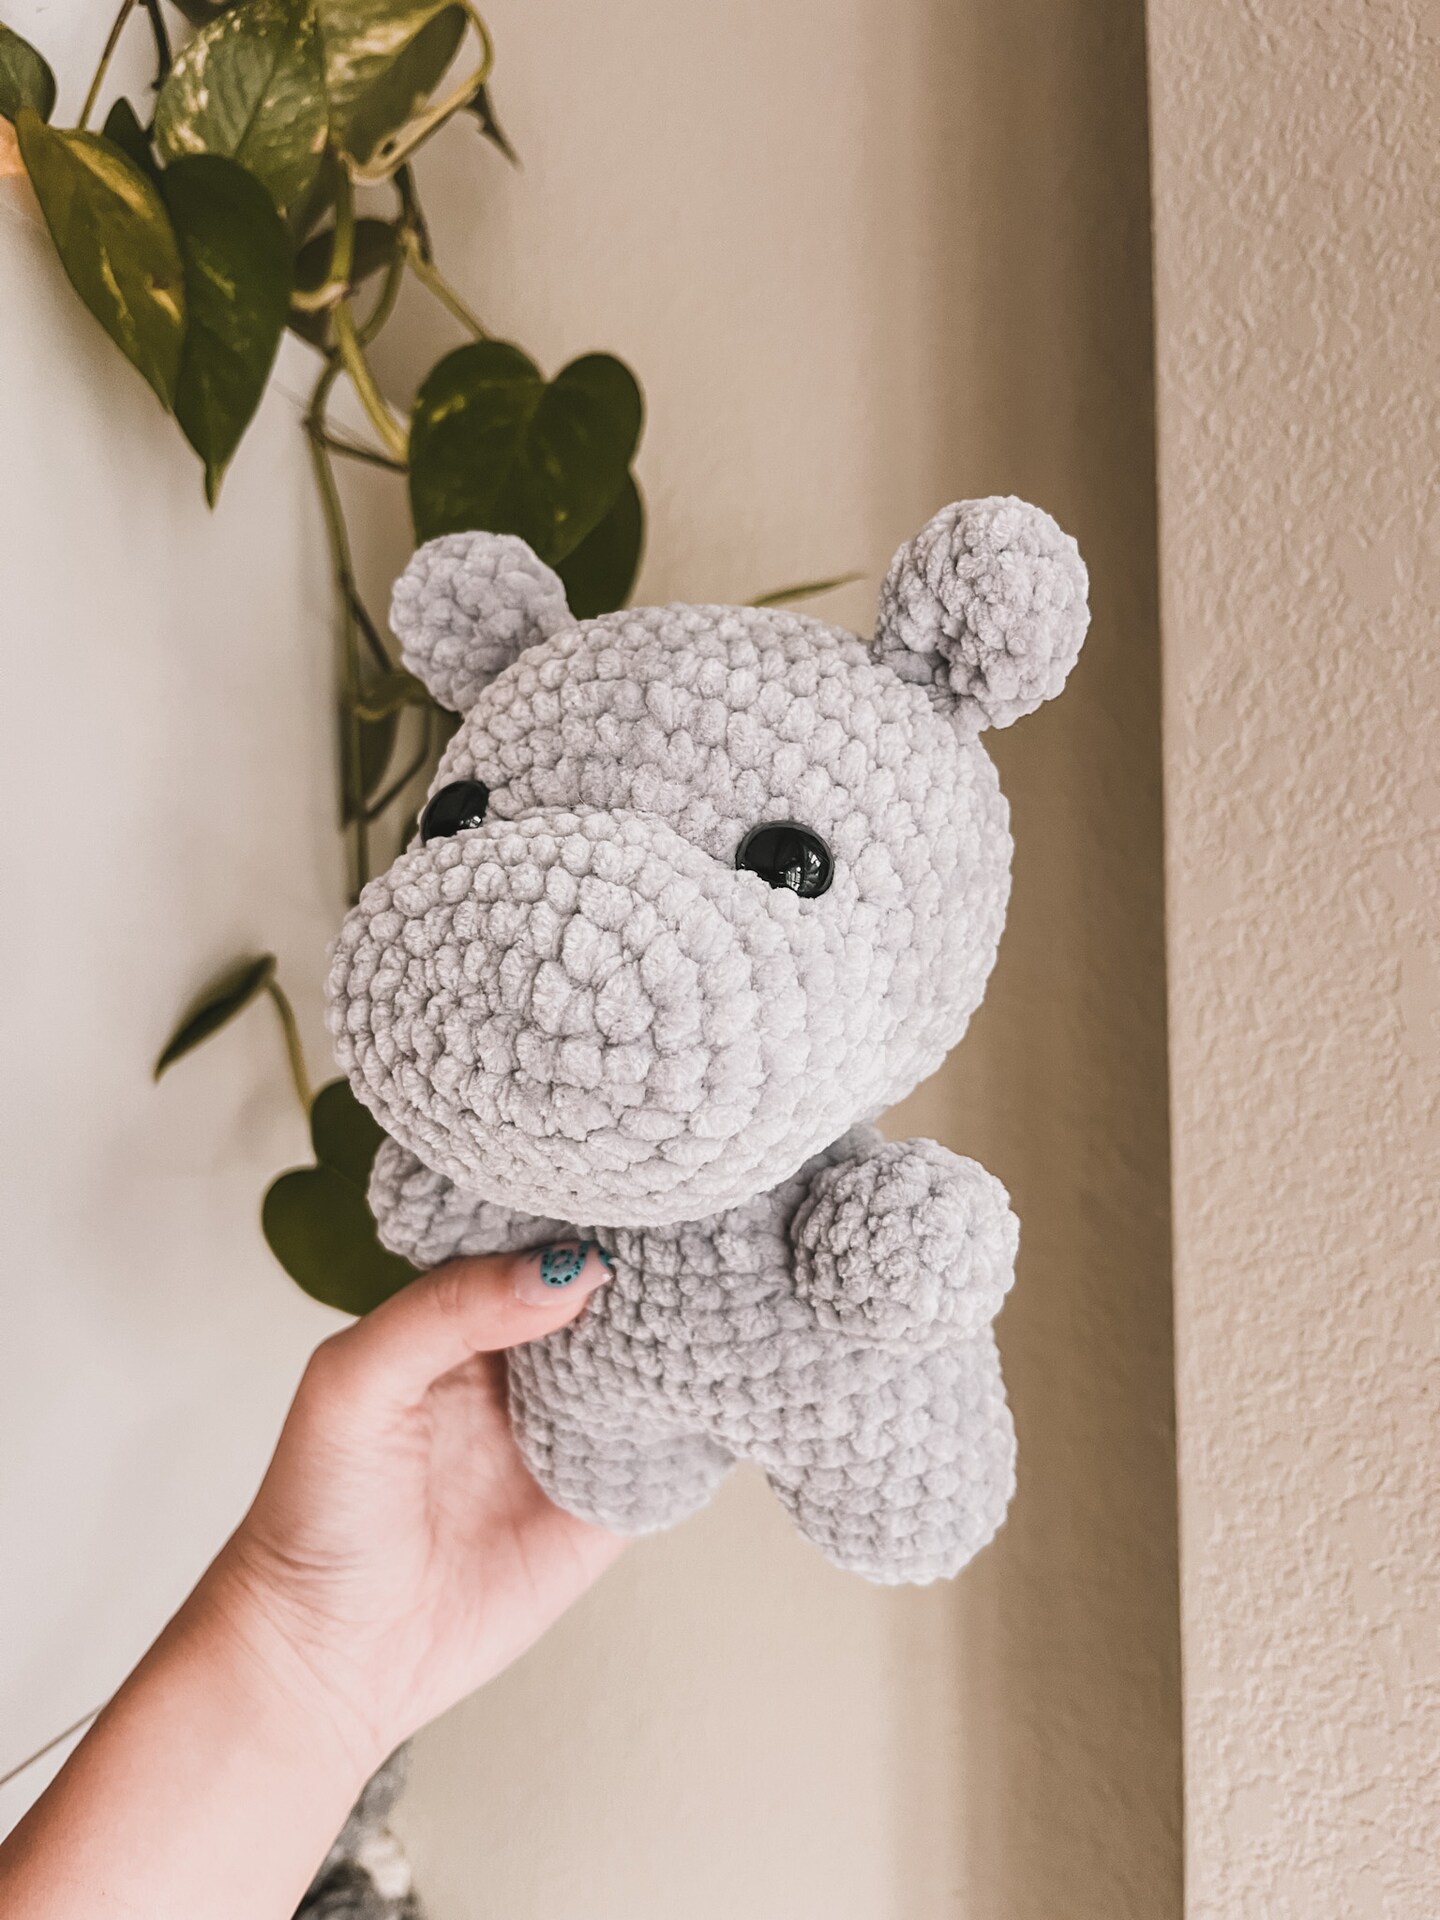 MADE TO ORDER Chubby Hippo Crochet Plushie Amigurumi Stuffed Animal 260066485109882880